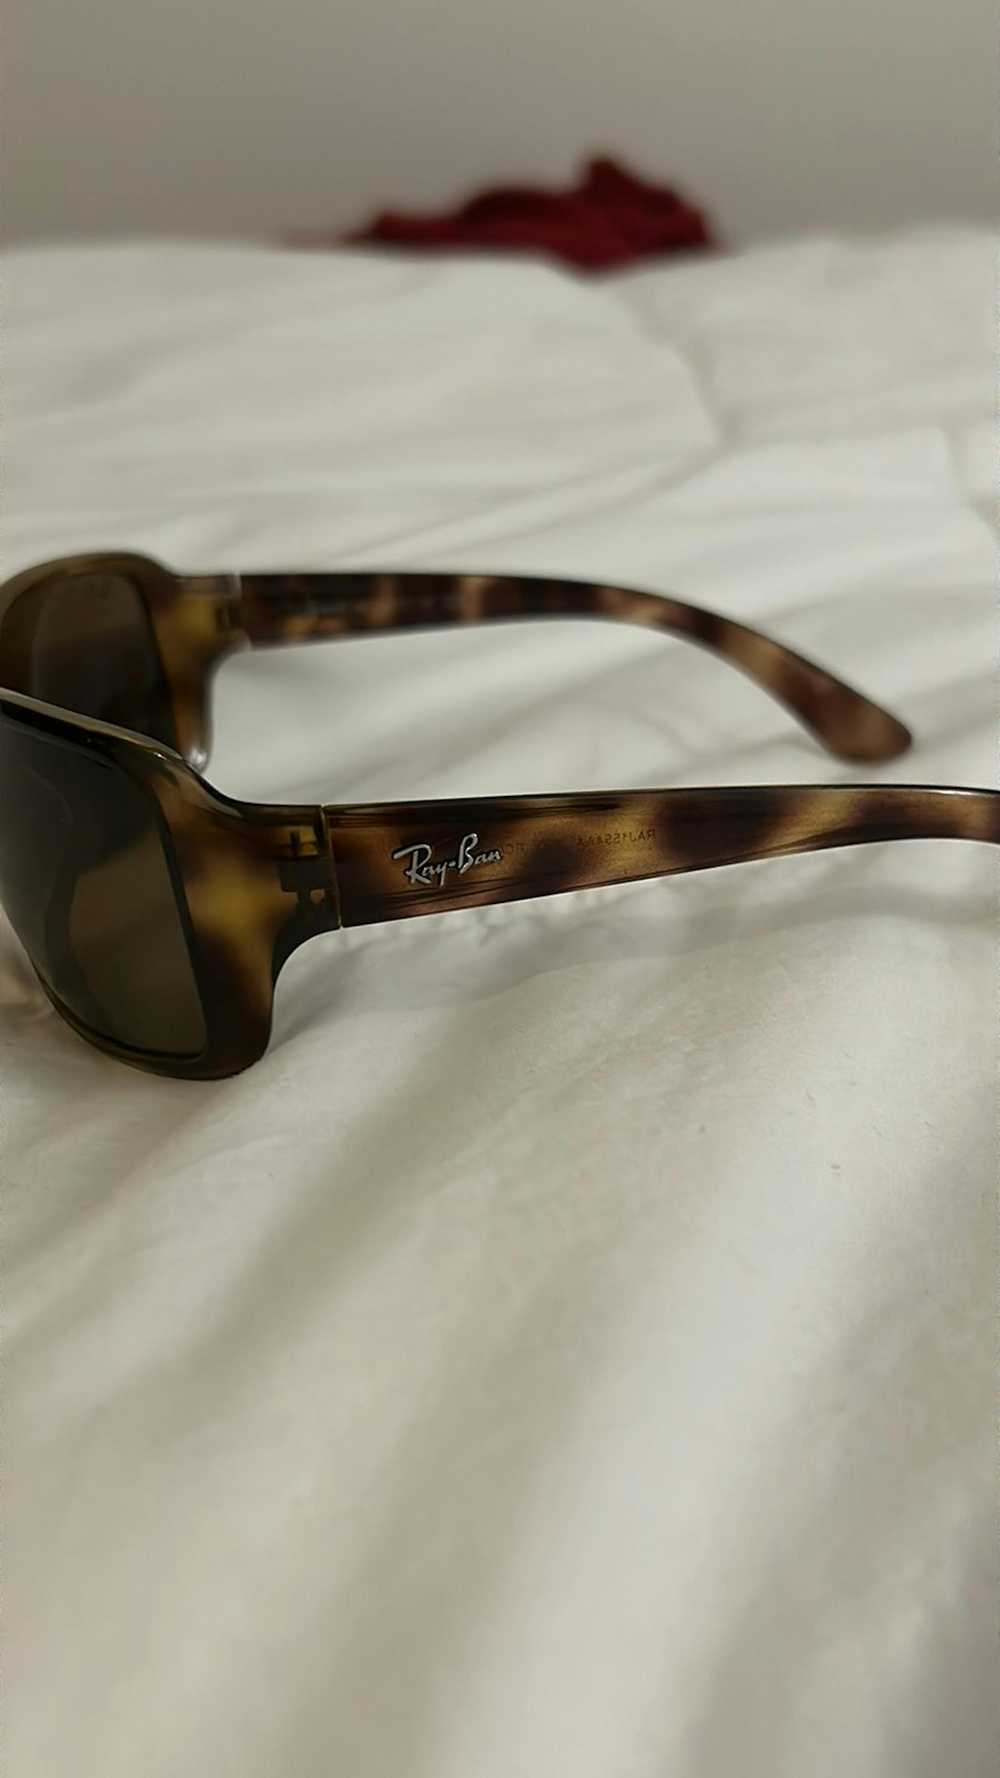 RayBan RayBan Sunglasses - image 5